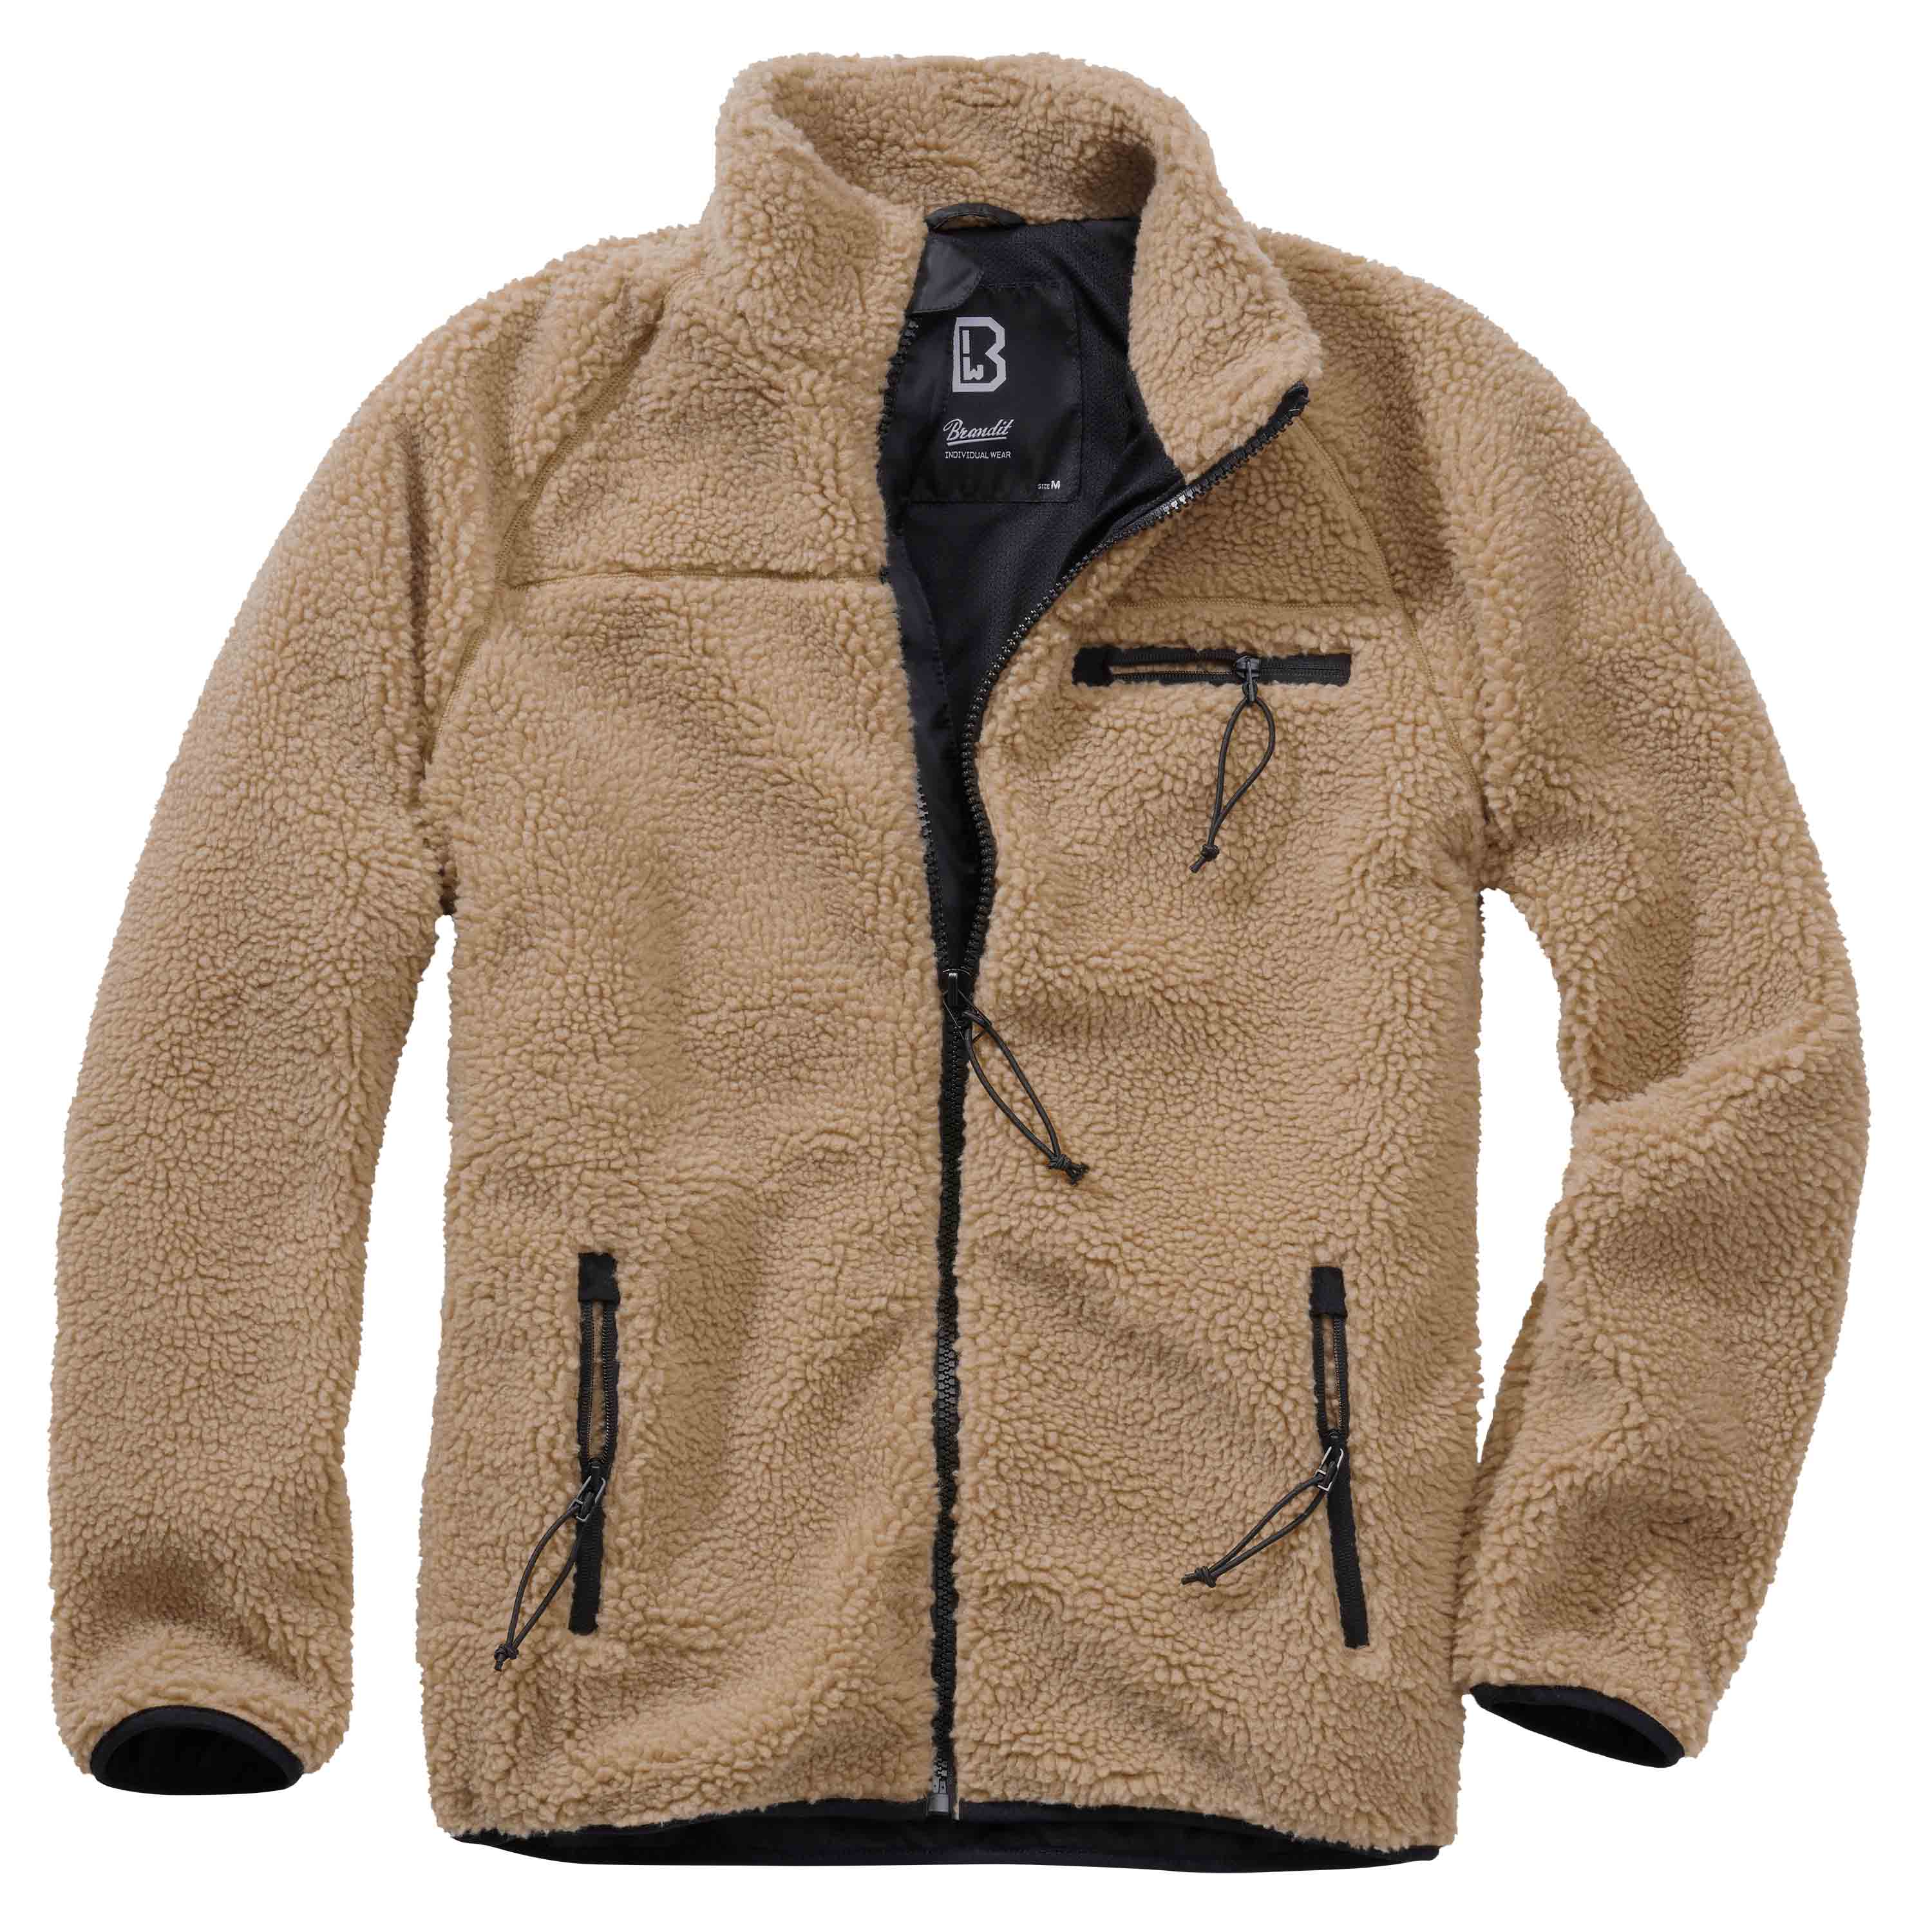 Purchase the ASMC by Fleece Brandit olive Jacket Teddy